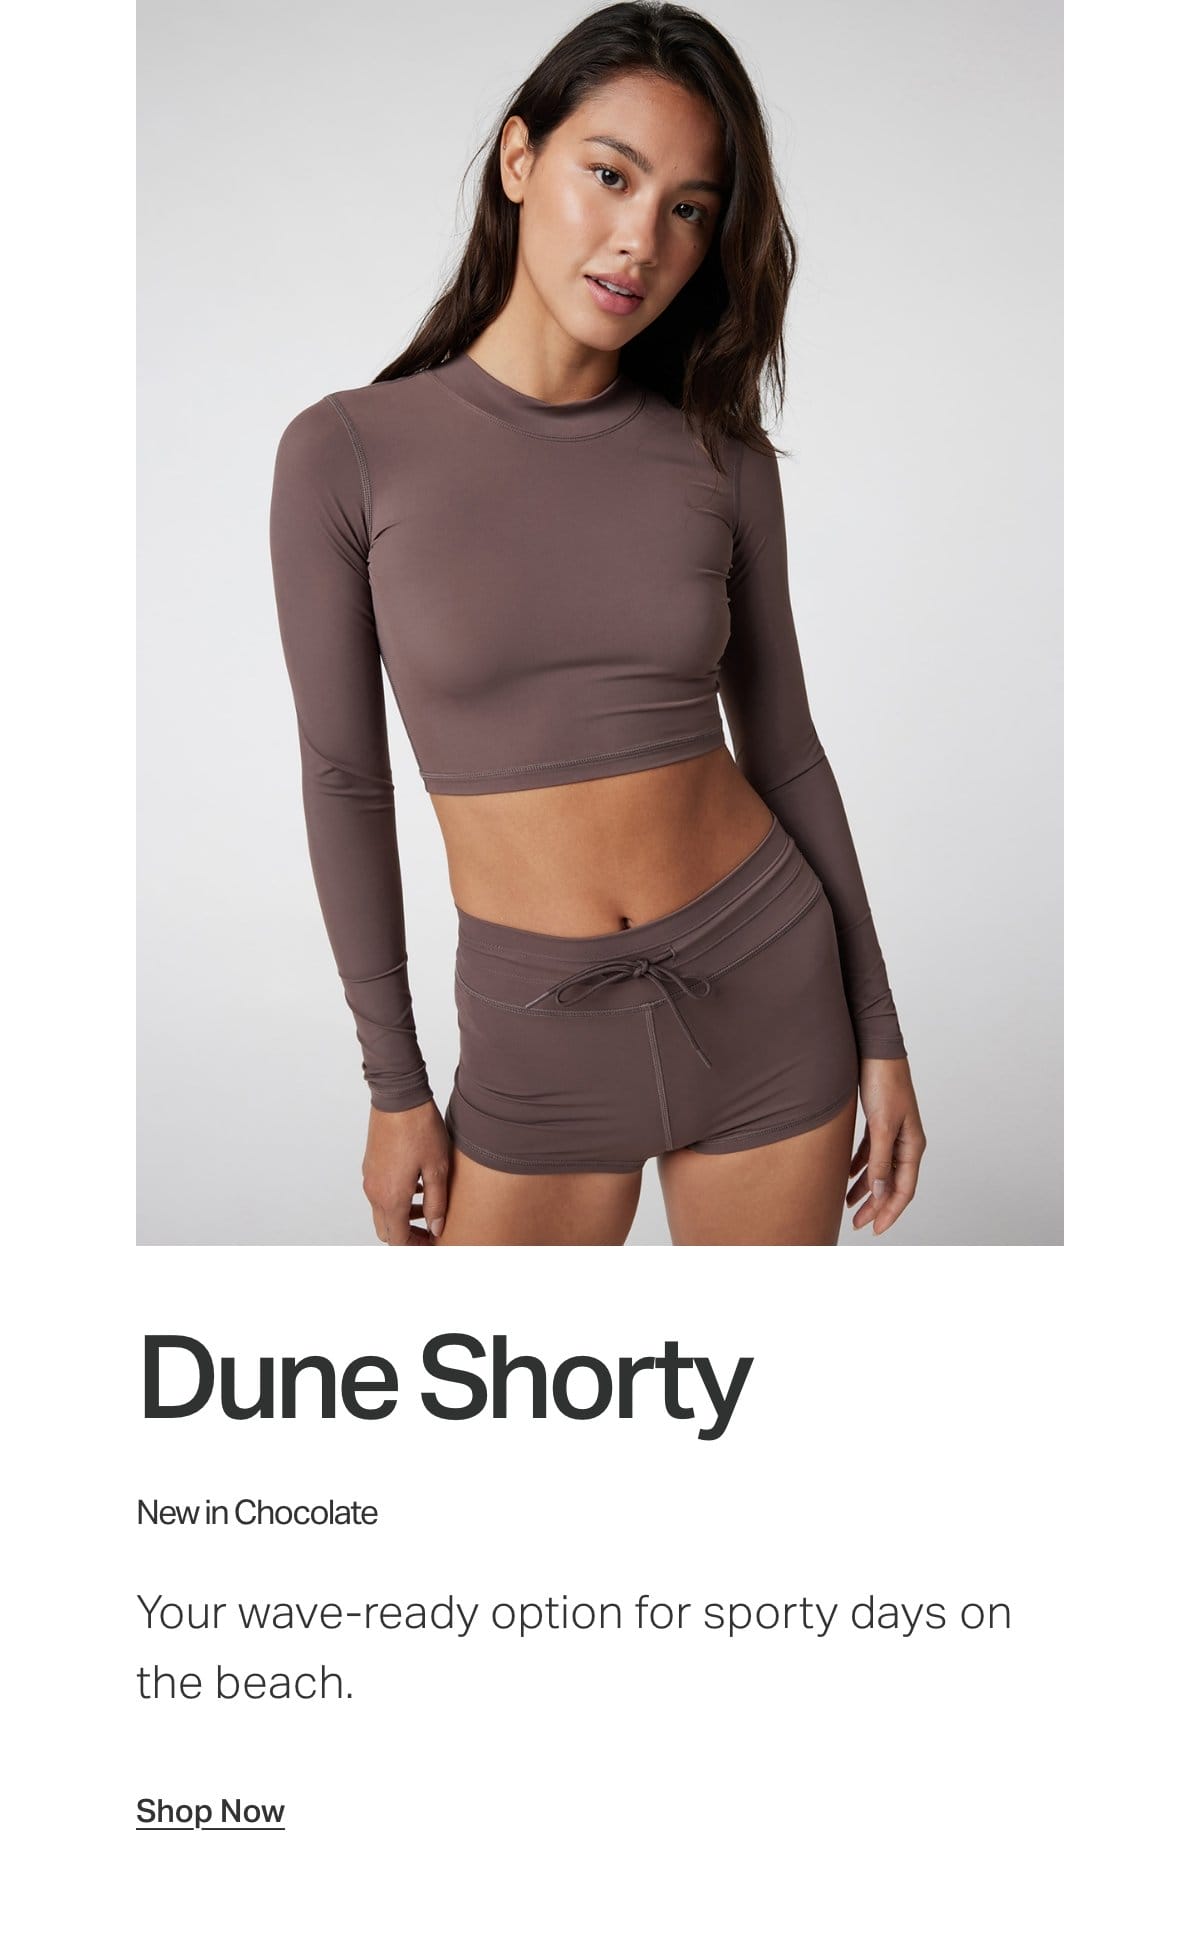 Dune Shorty